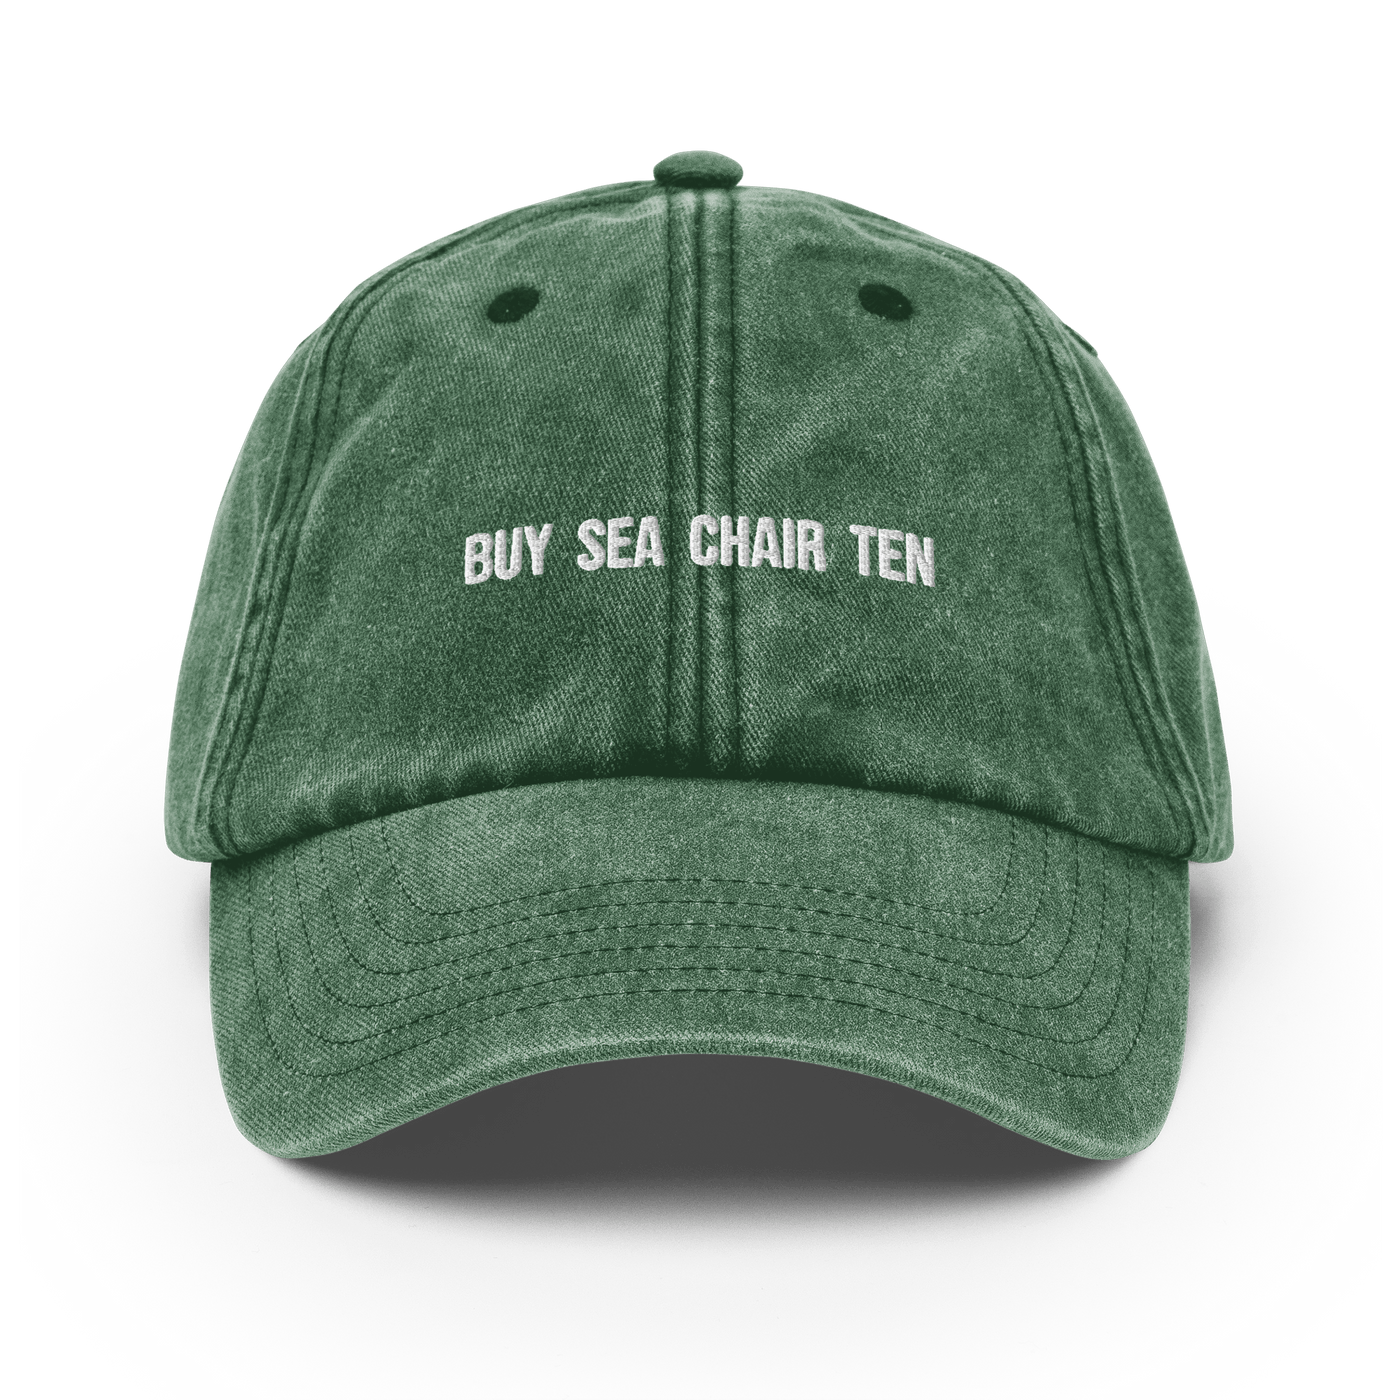 Buy Sea Chair Ten Vintage Hat - Vintage Bottle Green - - Just Another Cap Store